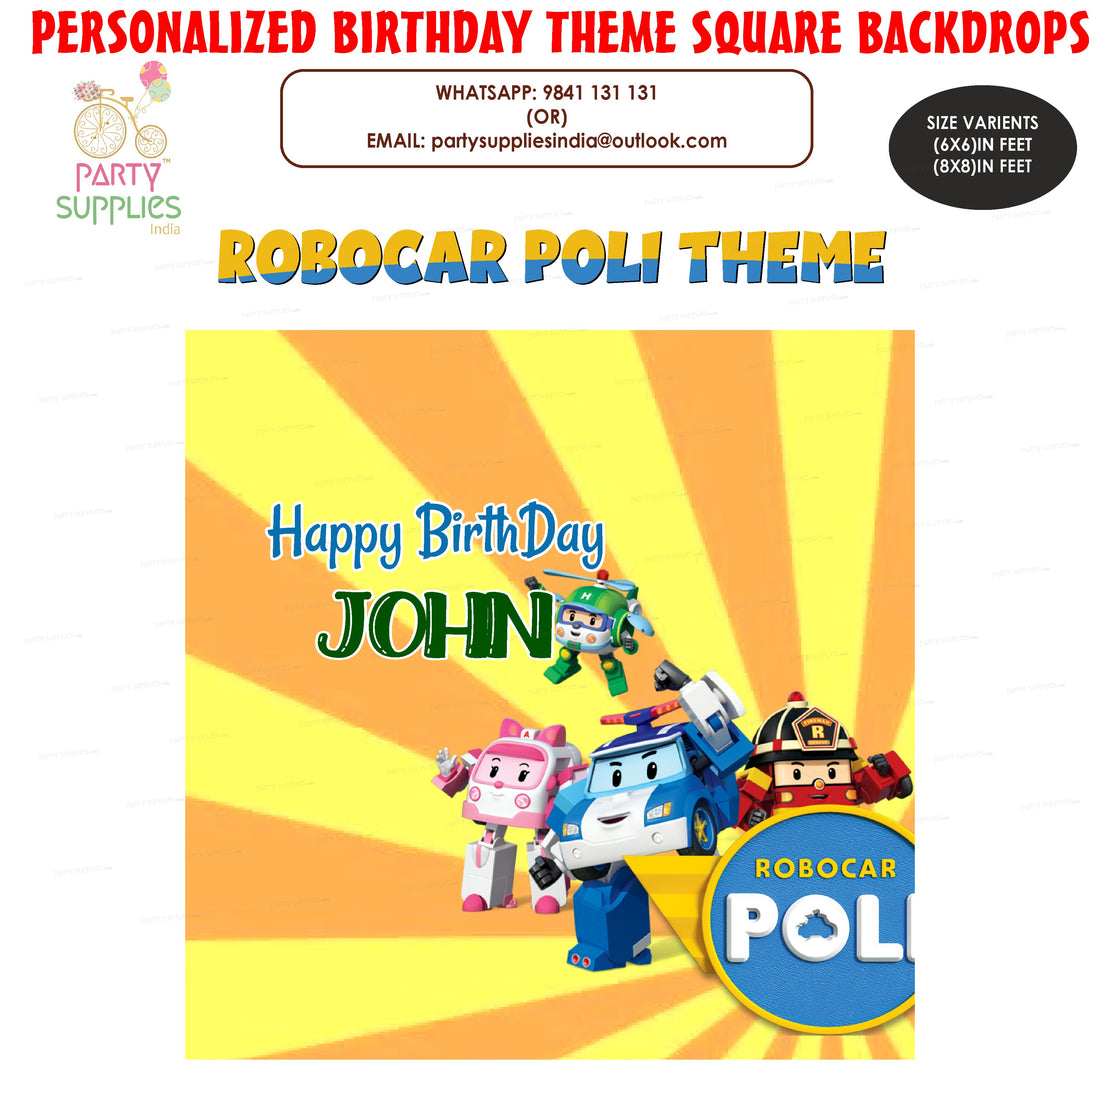 PSI Robo Poli Theme Personalized Square Backdrop